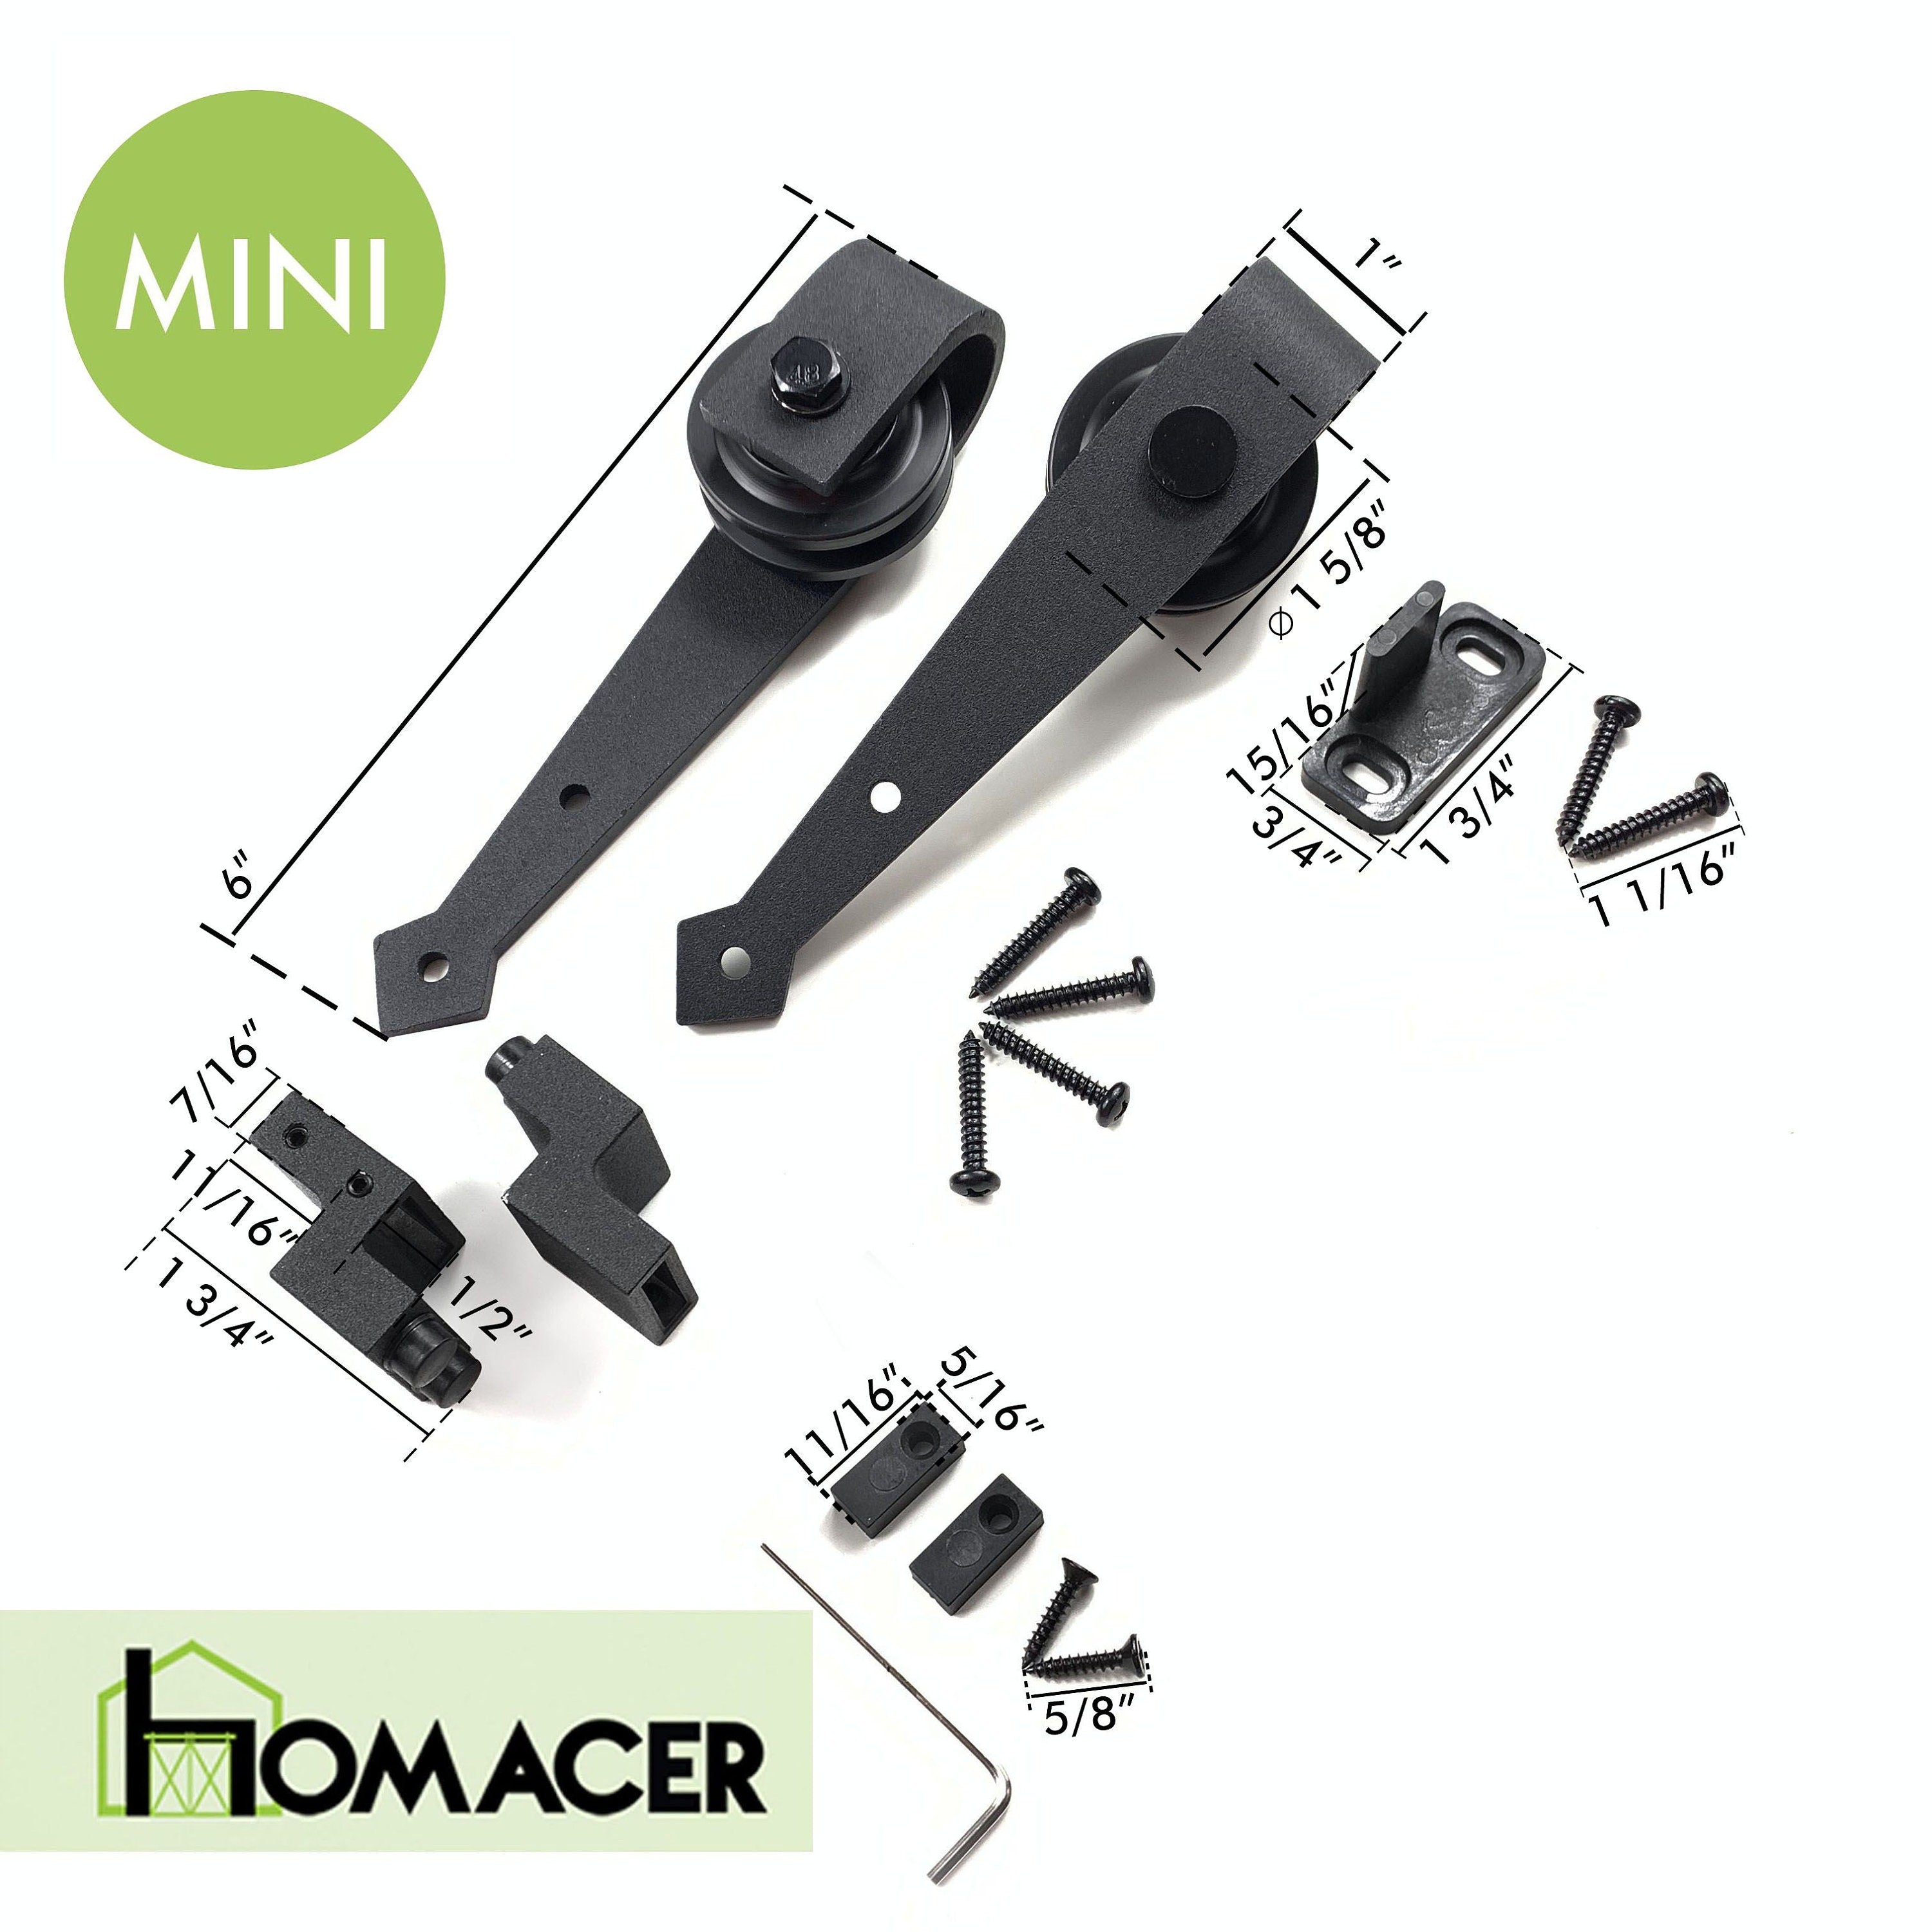 Homacer Mini Black Rustic Extra Roller Set for Different Desgin Rollers